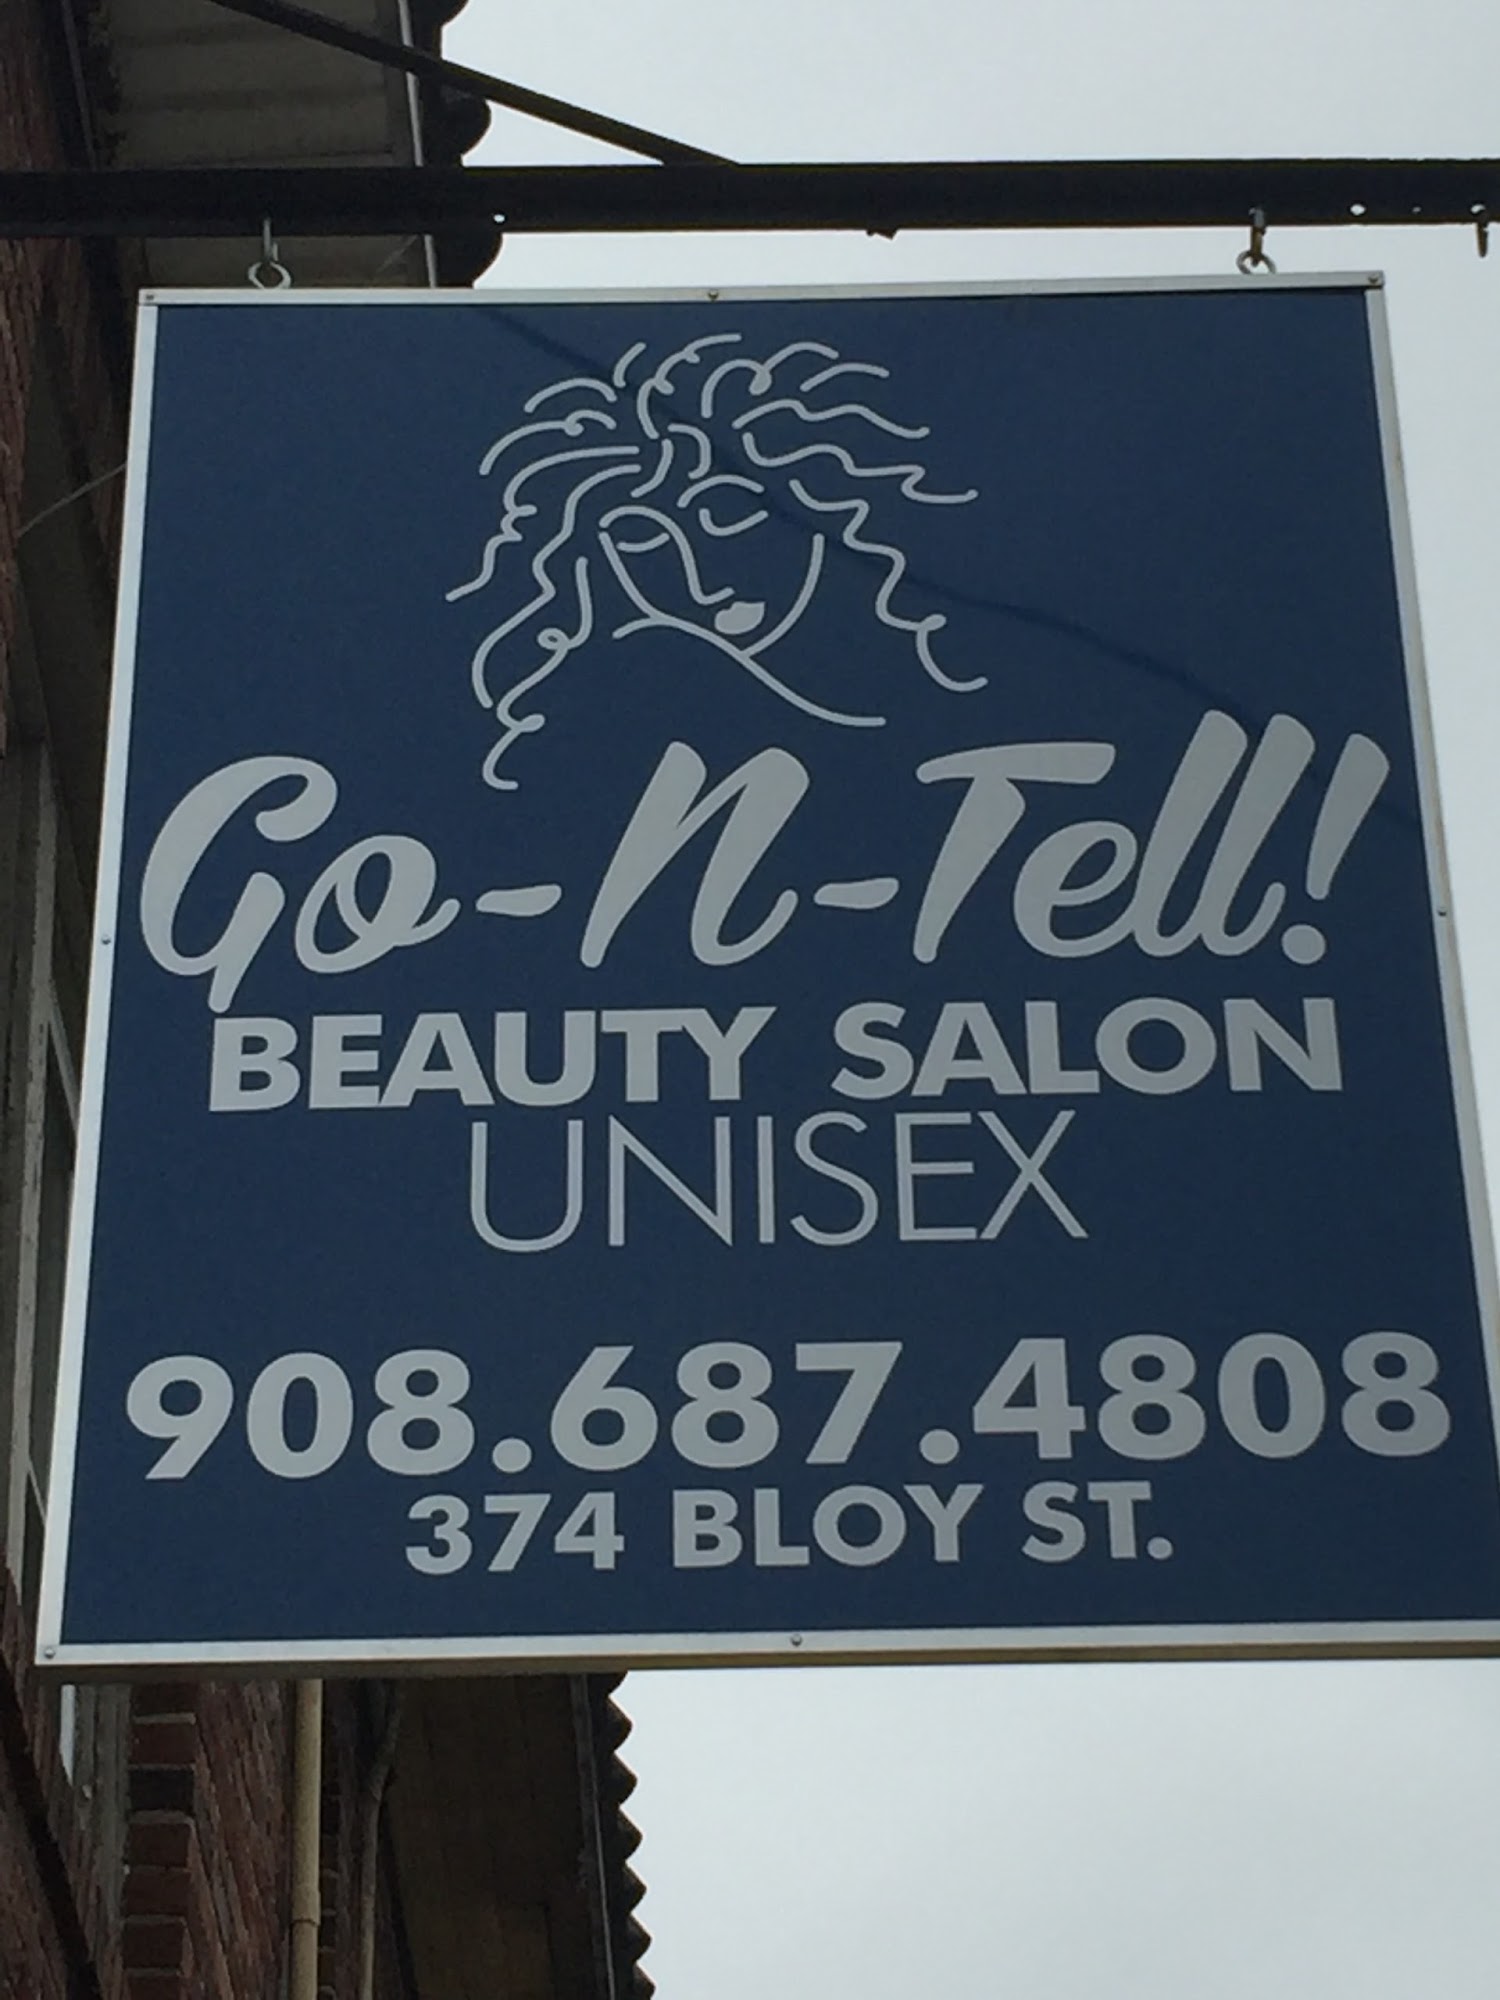 Go-N-Tell! Unisex Beauty Salon